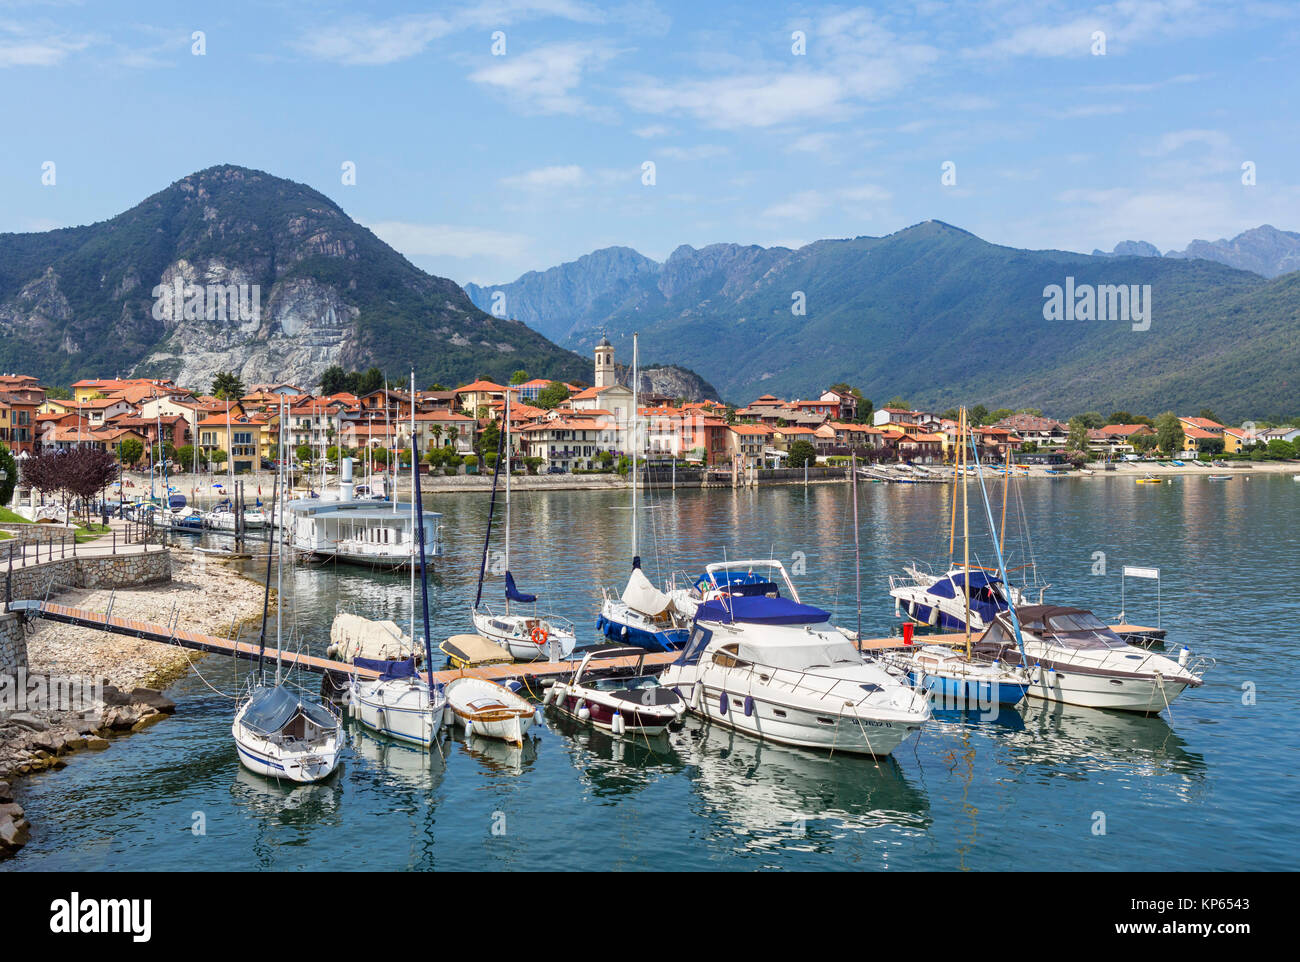 Harbour in Feriolo, Lake Maggiore, Italian Lakes, Piedmont, Italy Stock Photo